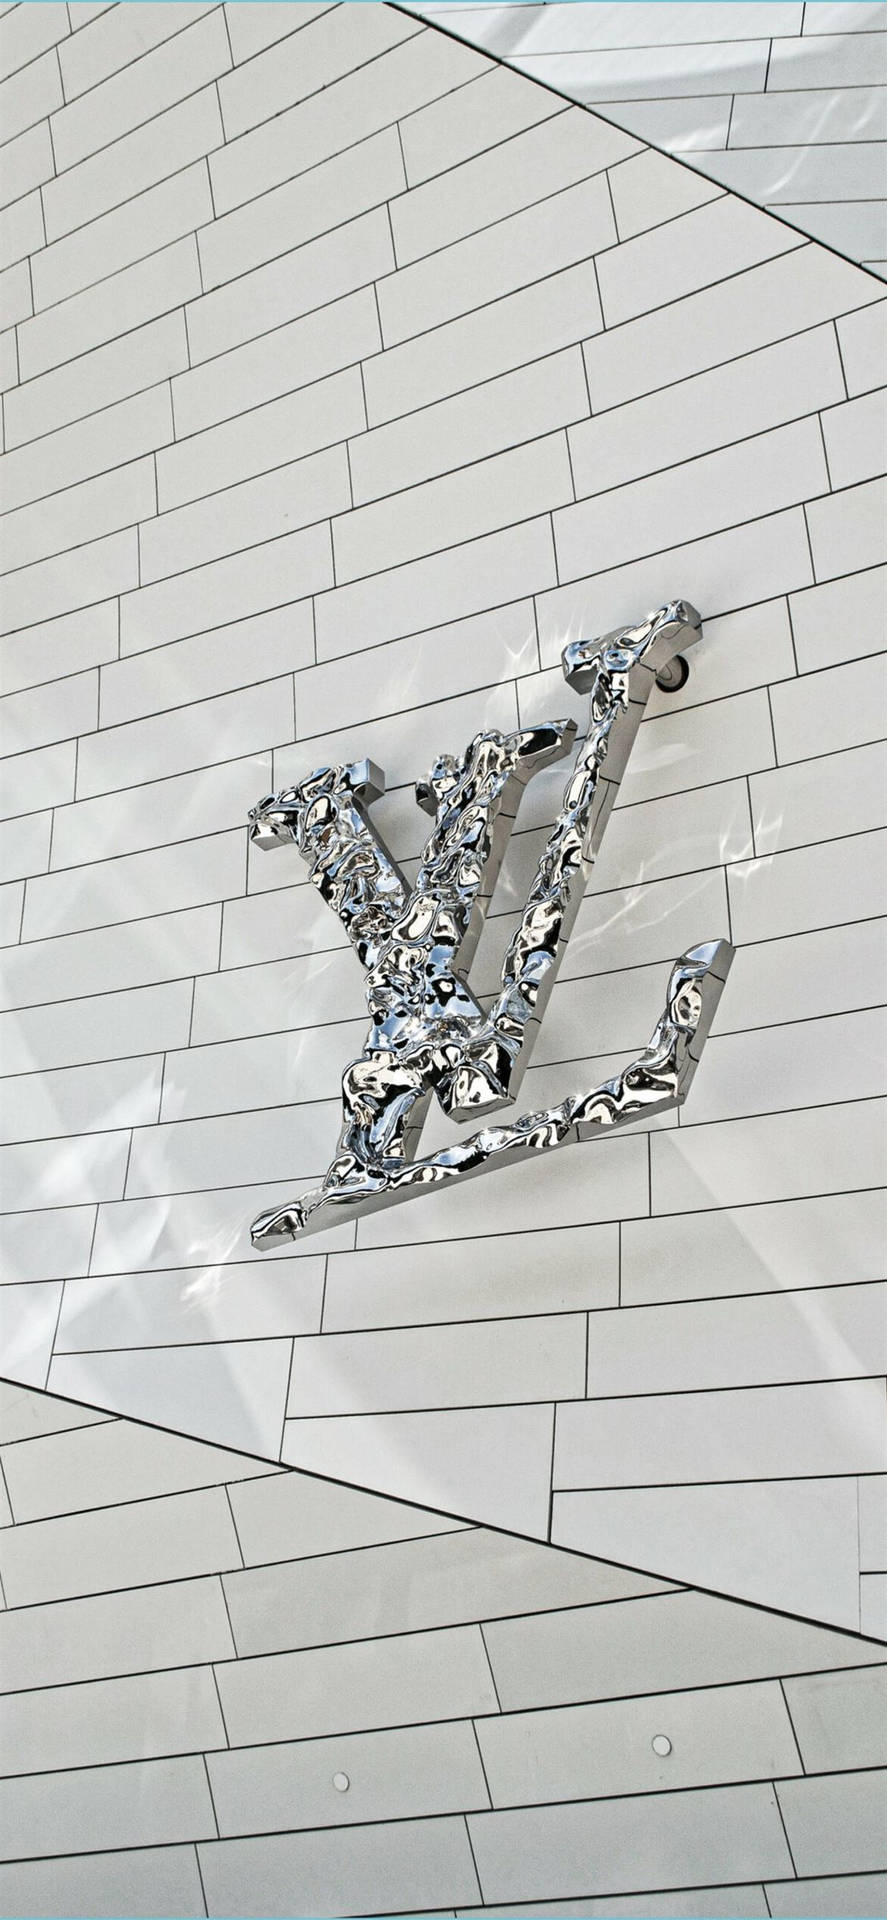 Foundation Logo Louis Vuitton Phone Background